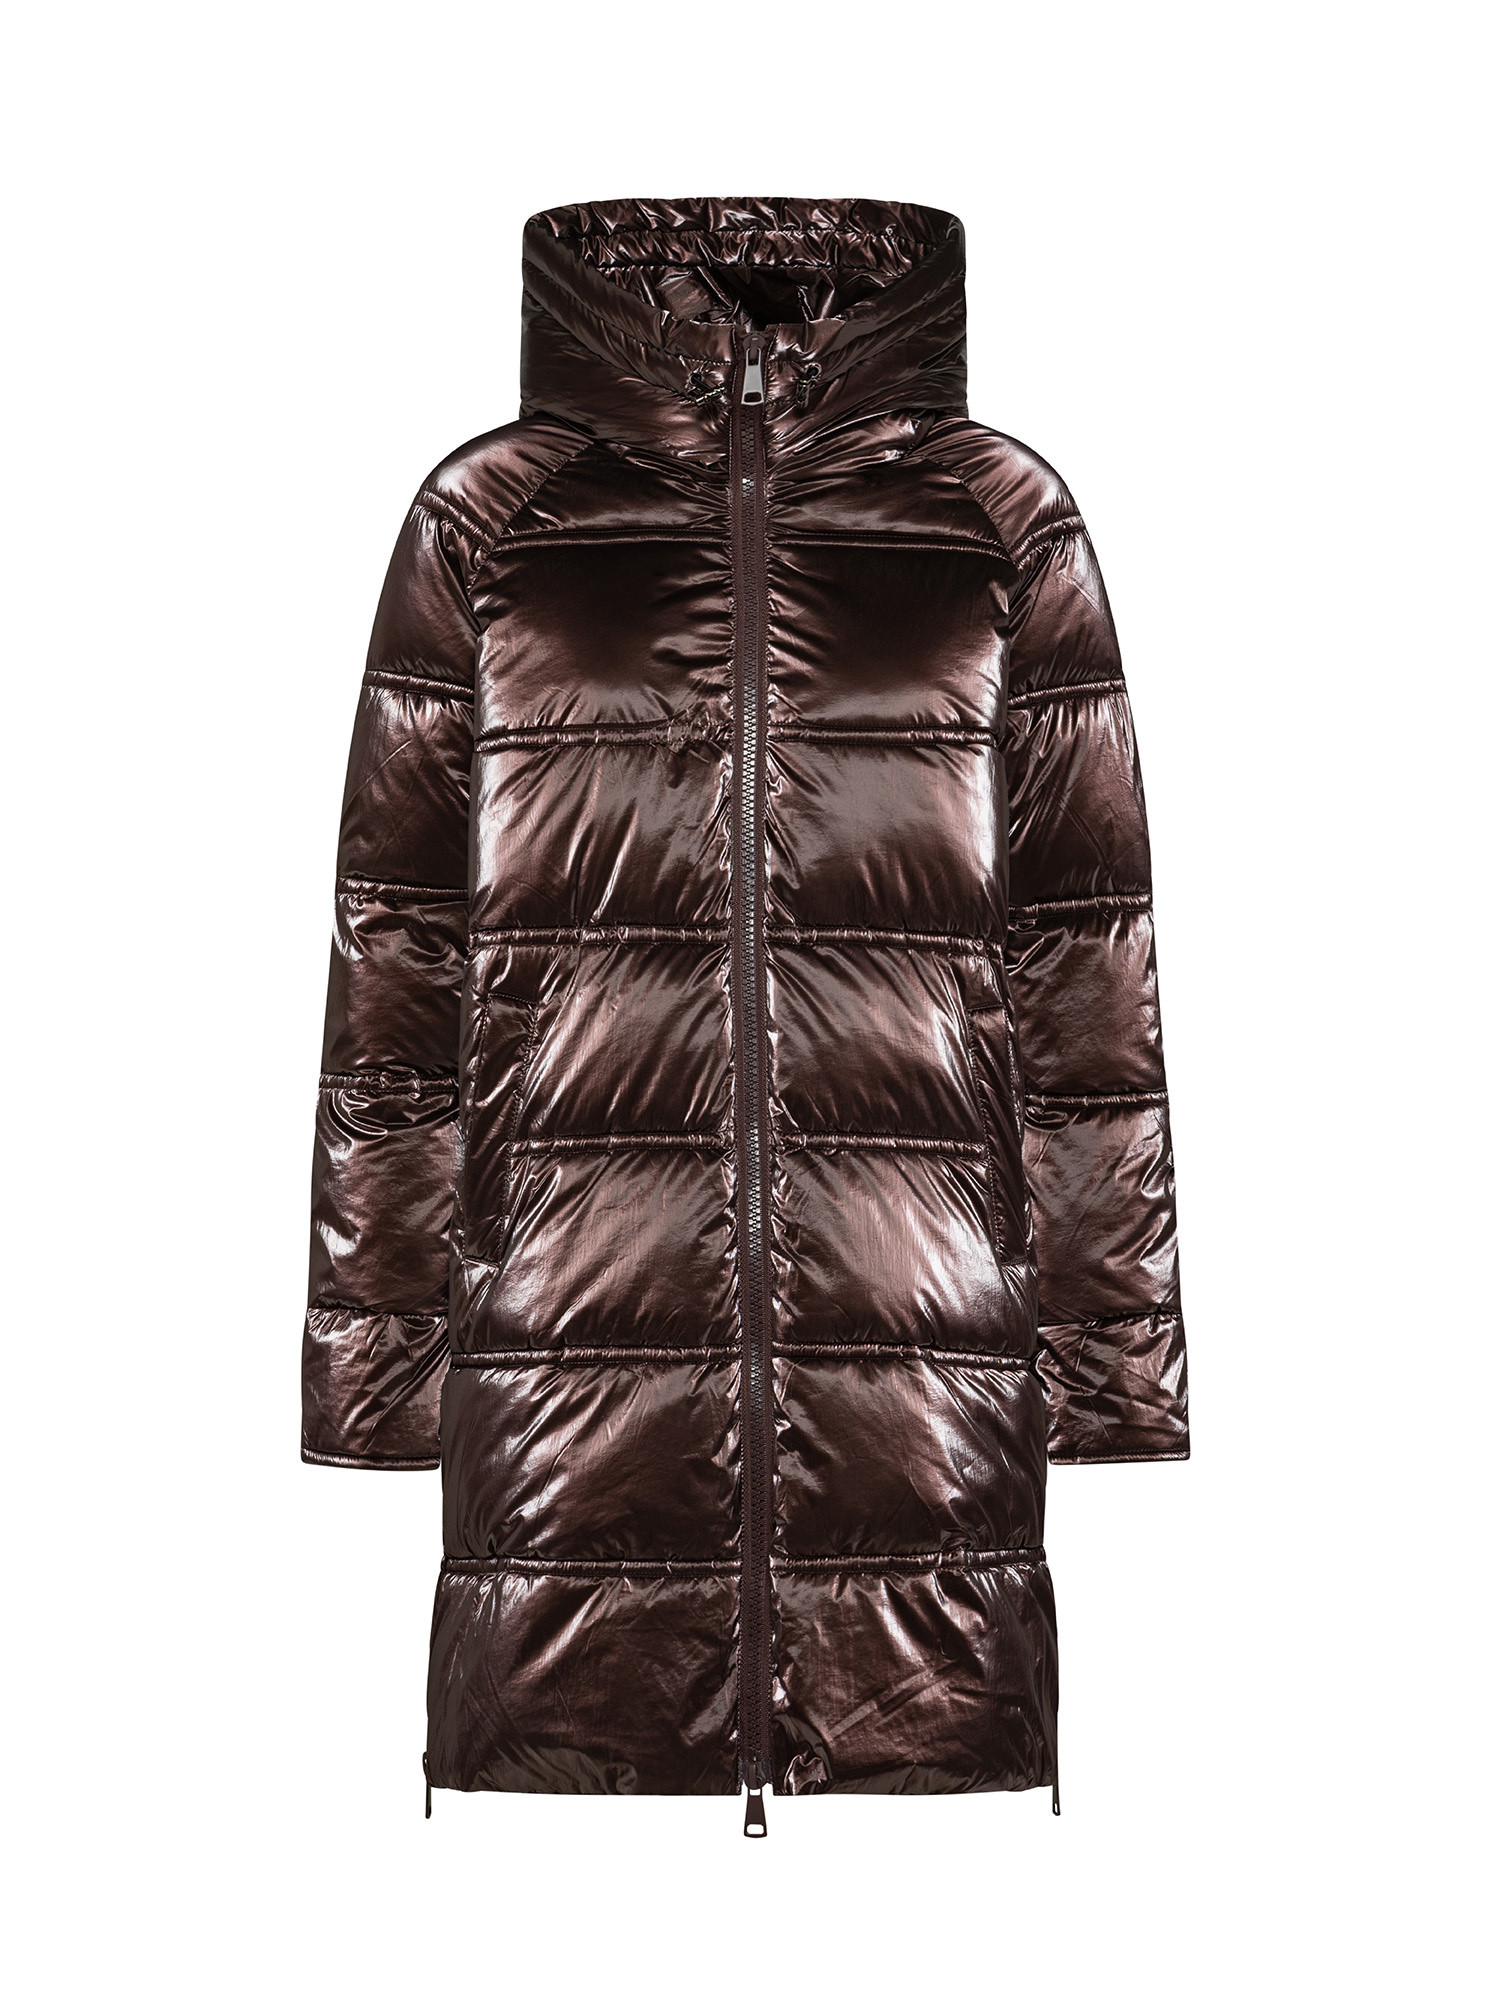 Koan - Shiny down jacket, Brown, large image number 0